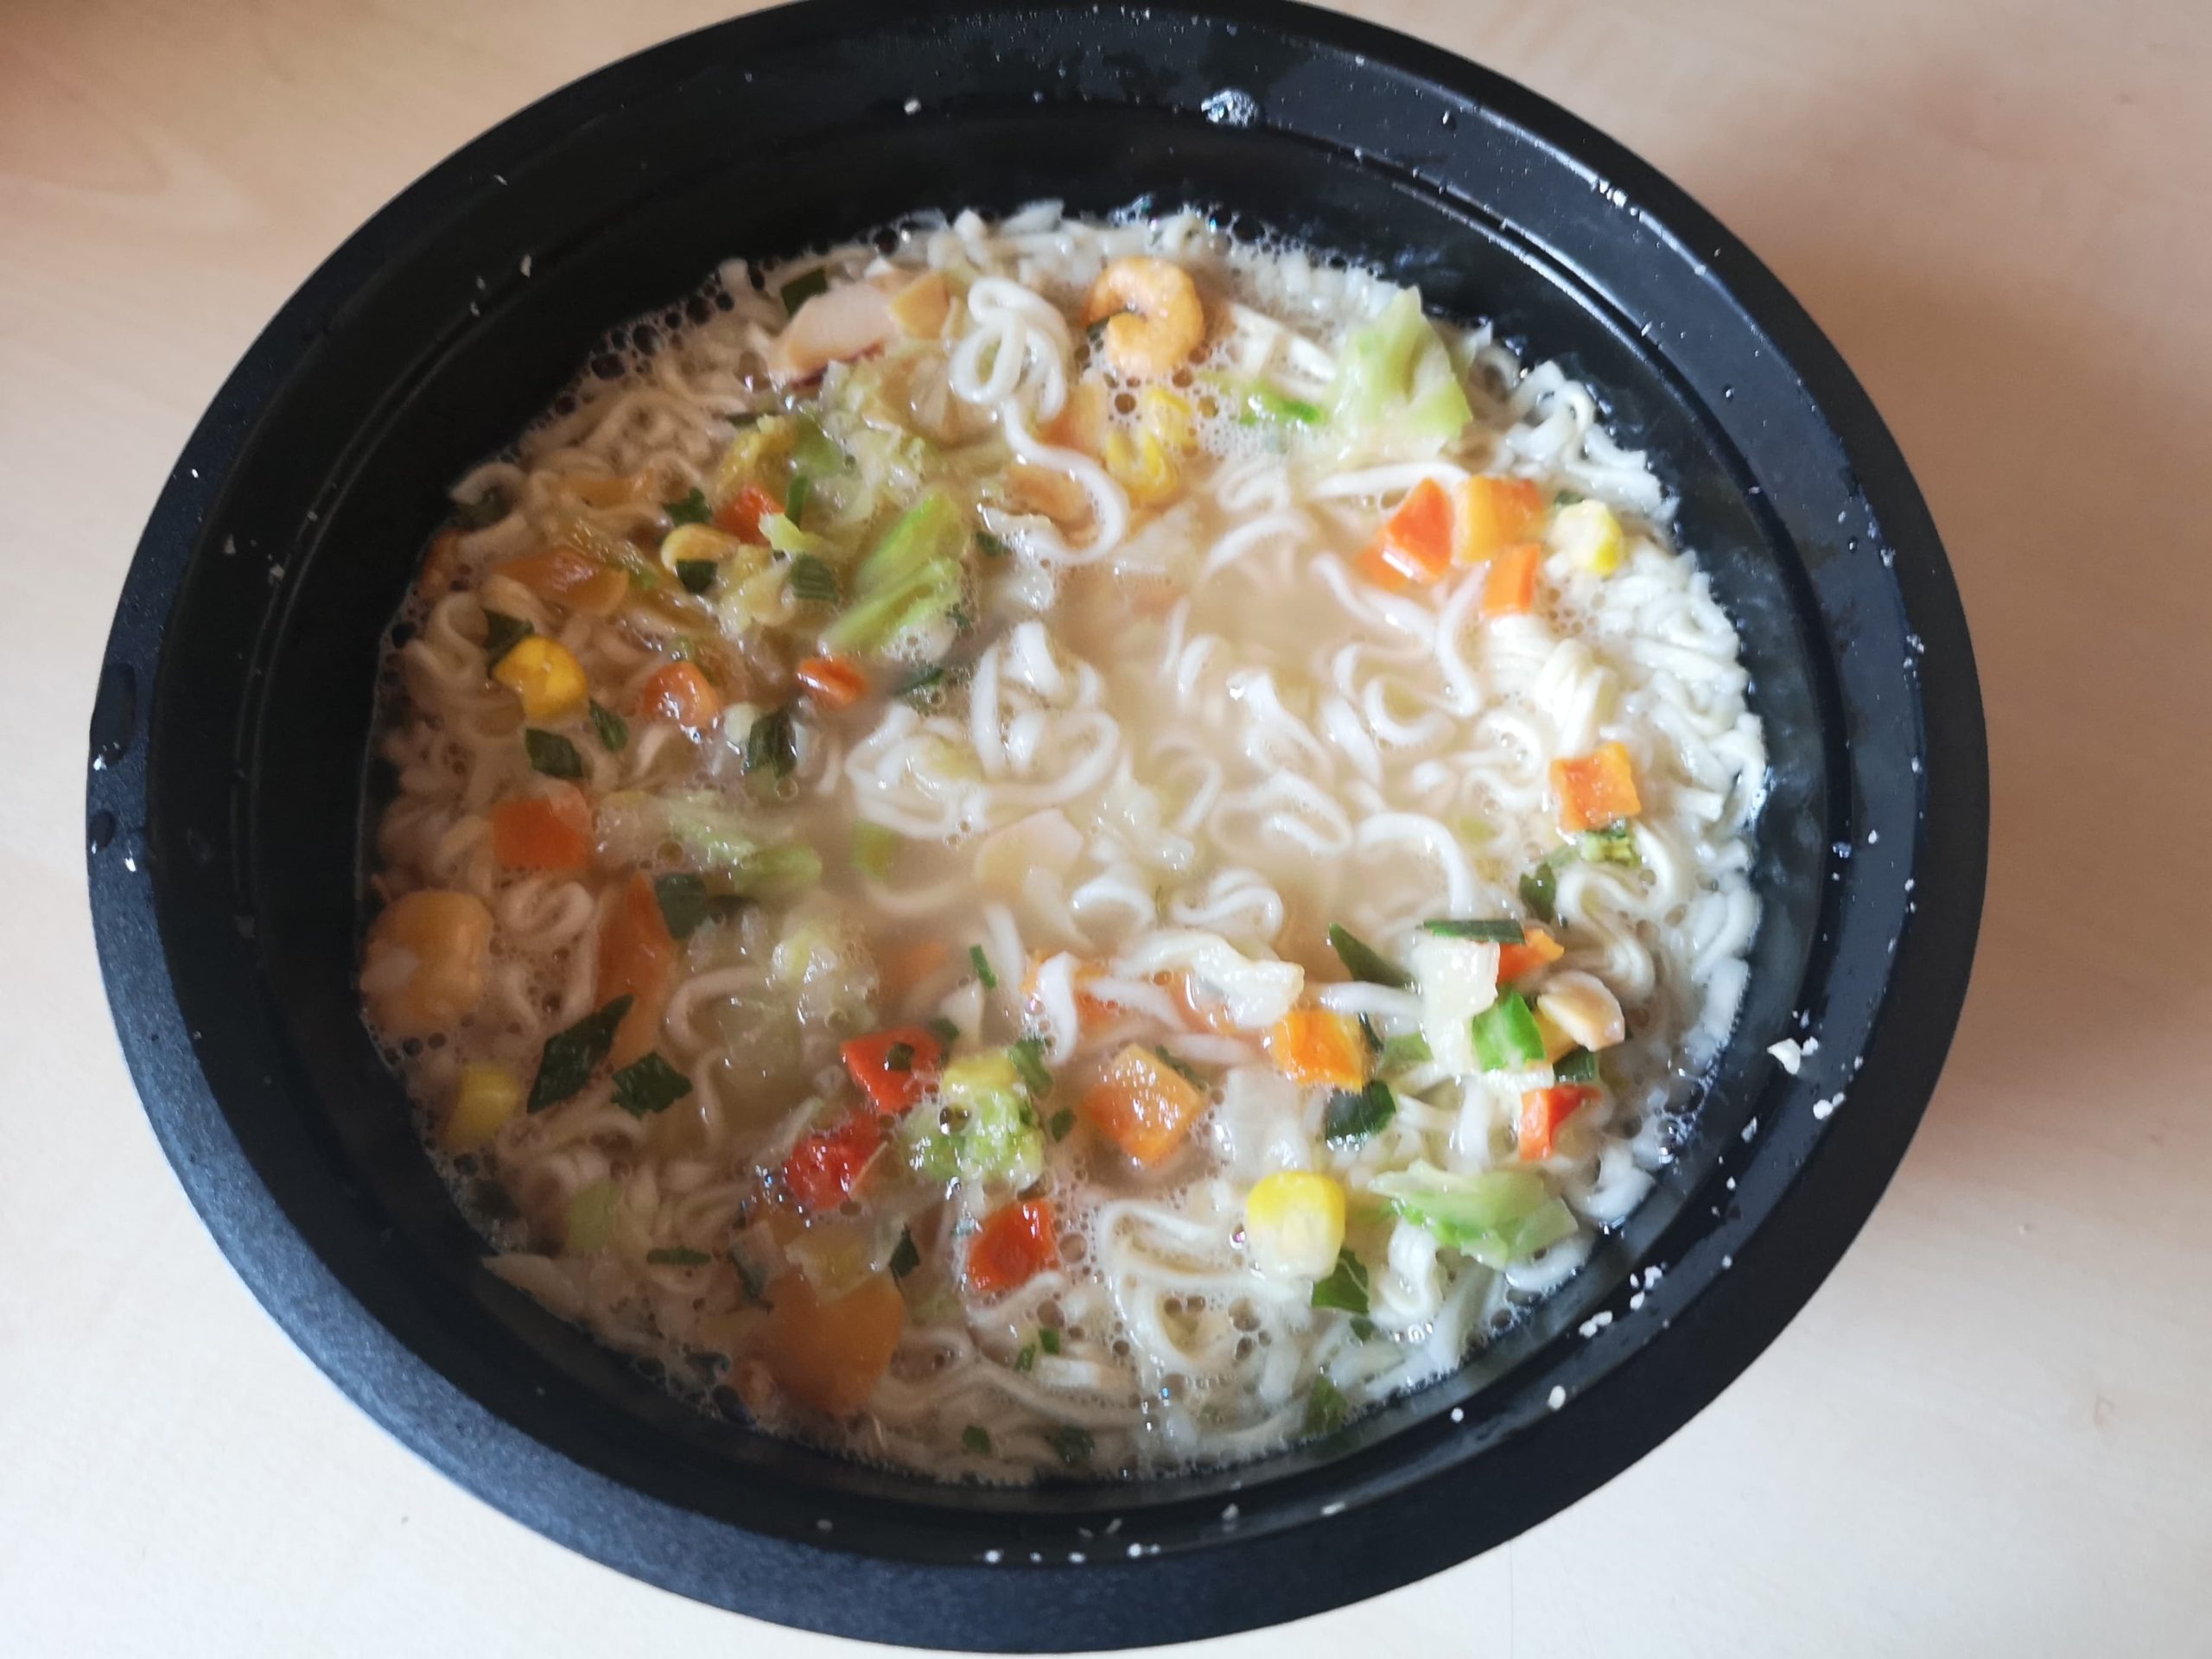 #1808: Unif Tangdaren "Seafood Noodle" Bowl